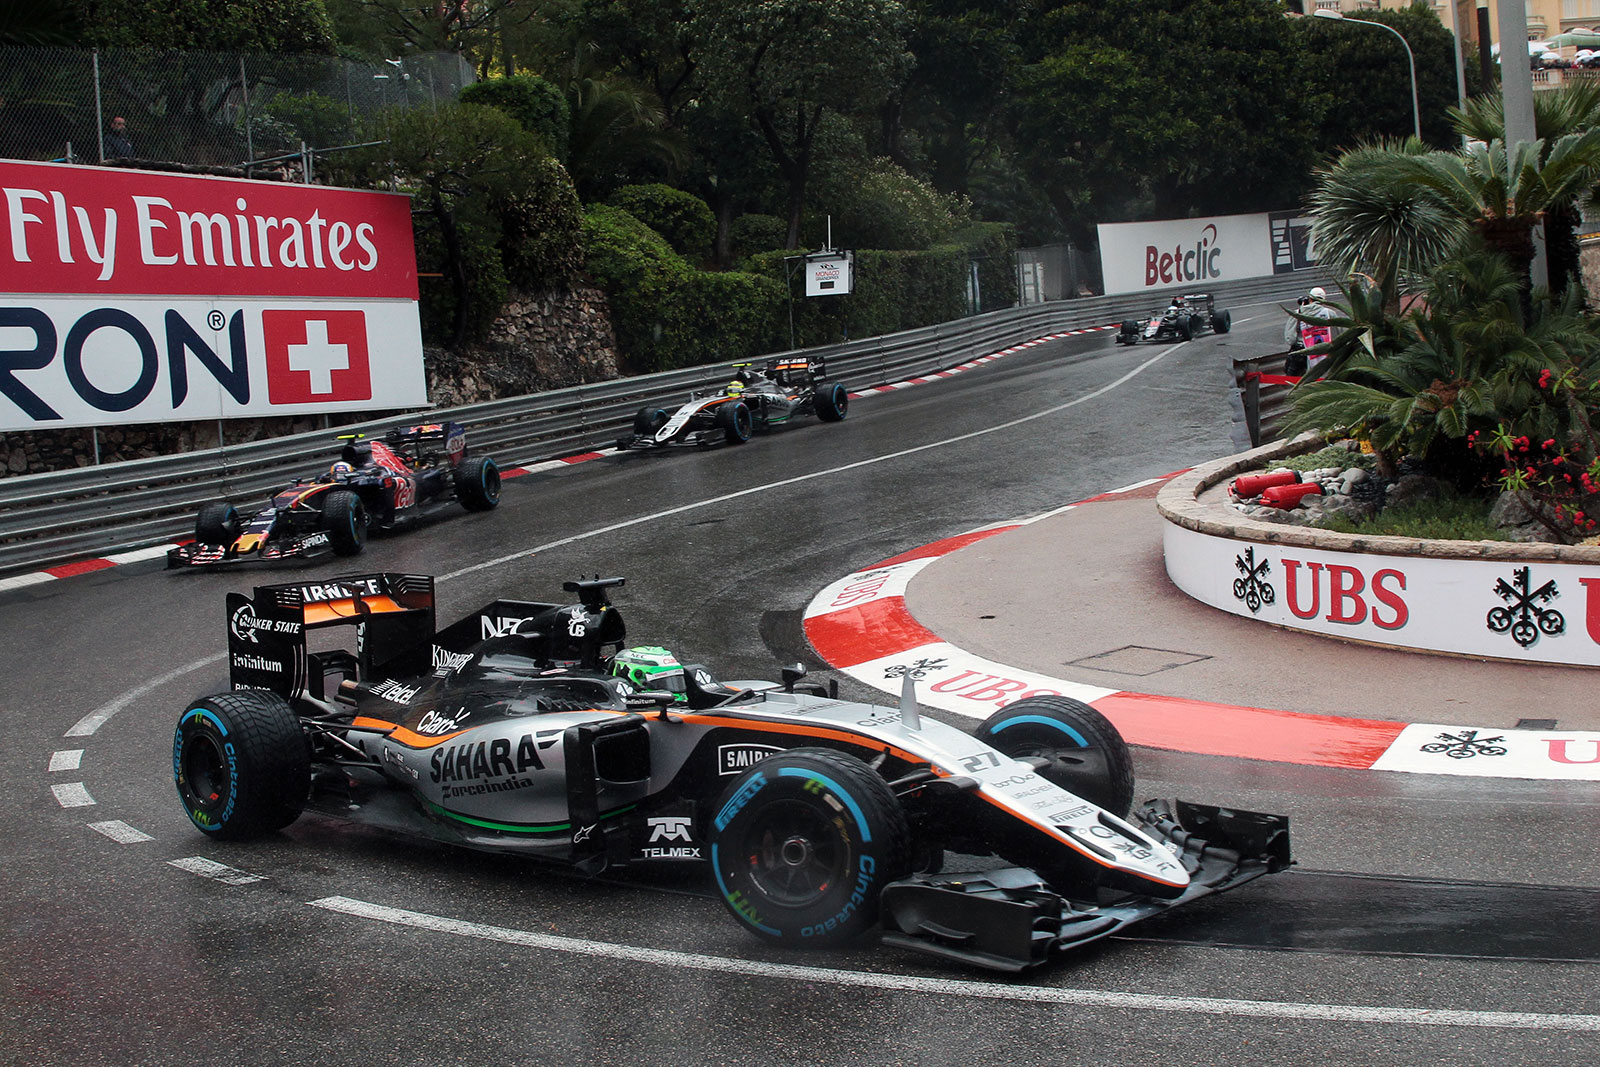 Monaco Grand Prix 2022 2023 Formula 1 Hospitality Tickets Hotels